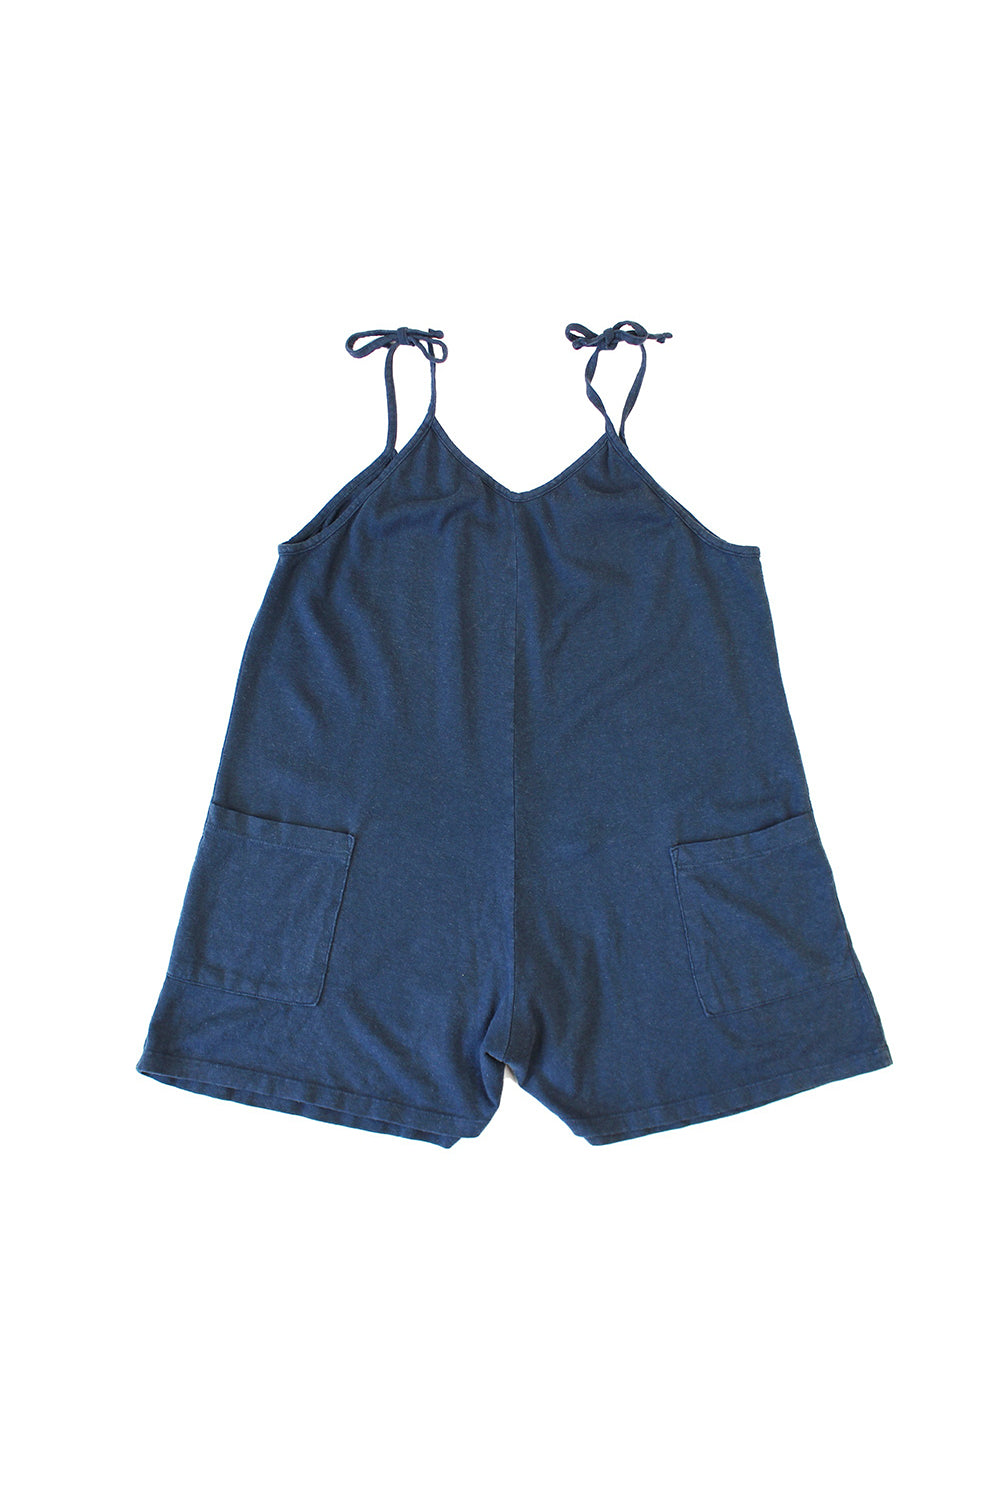 Sespe Short | Jungmaven Hemp Clothing & Accessories / Color: Navy